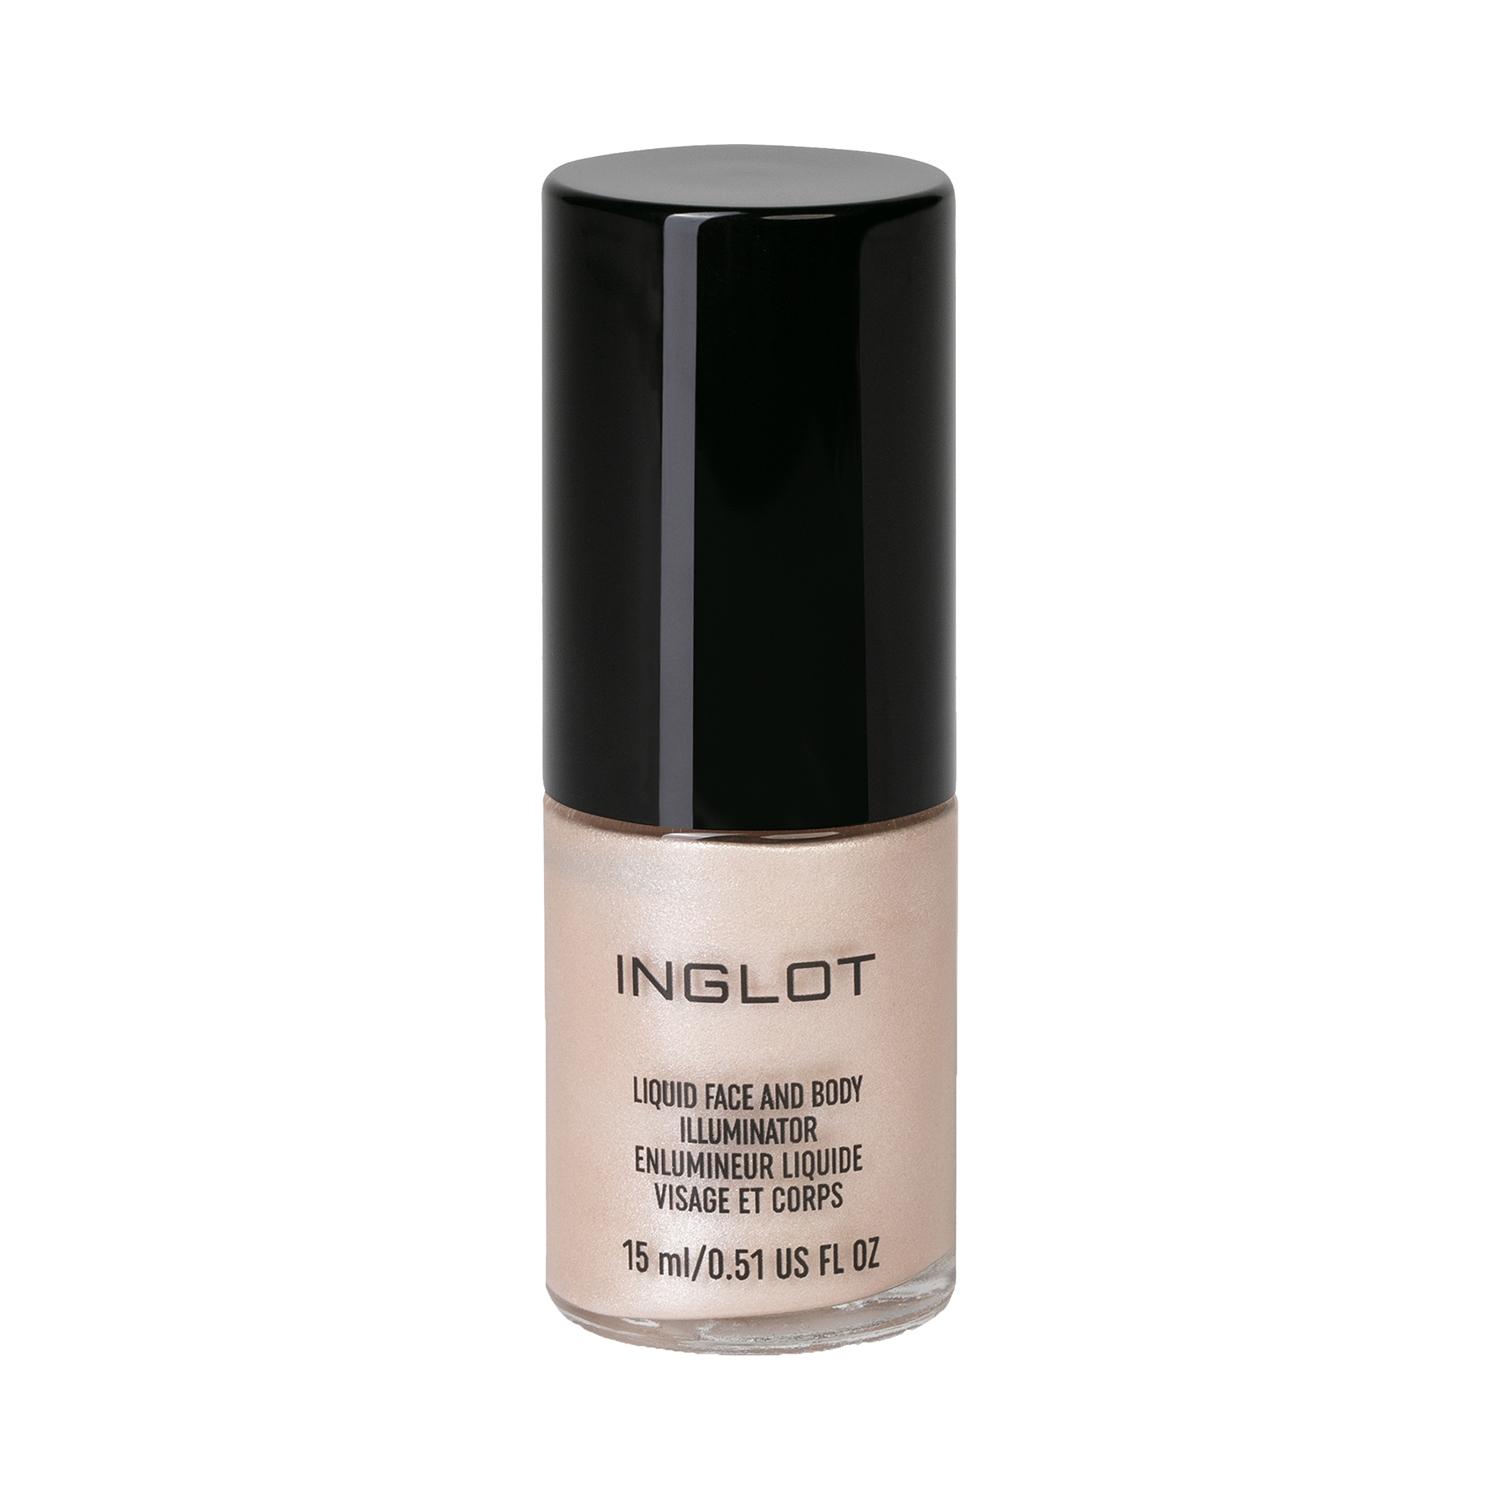 inglot liquid face & body illuminator - 70 shade (15ml)